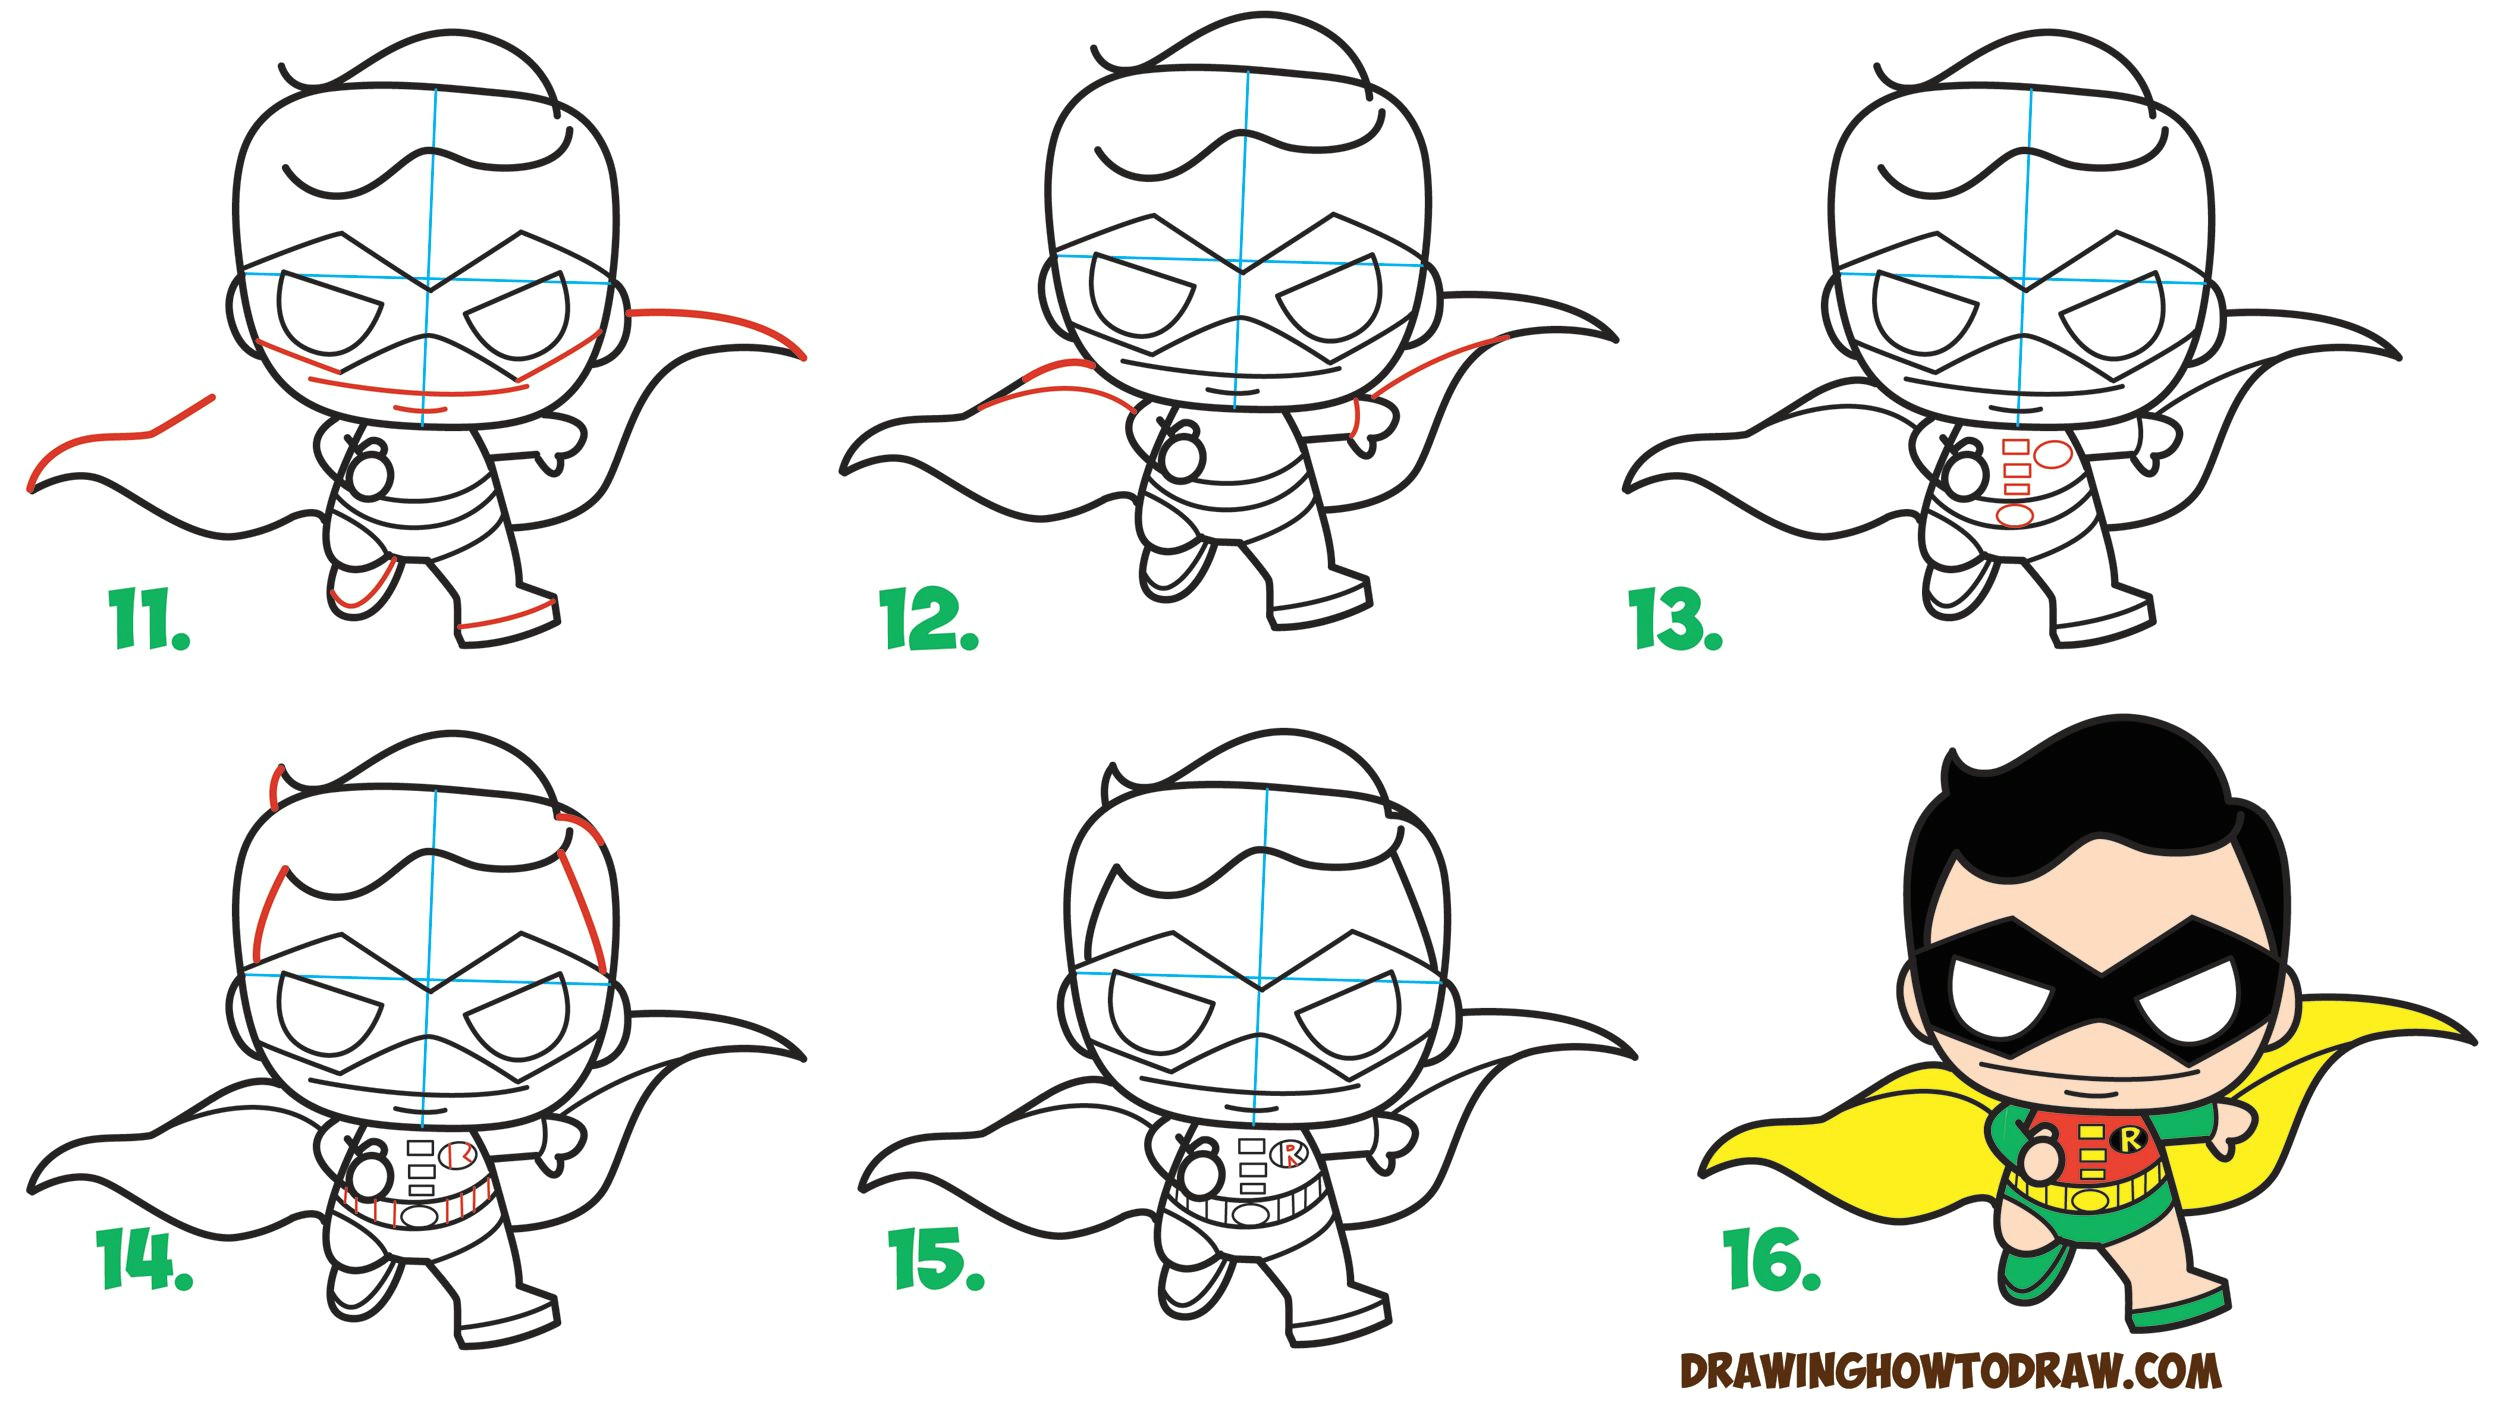 Drawing Cute Batman How to Draw Cute Kawaii Chibi Robin From Dc Comics Batman